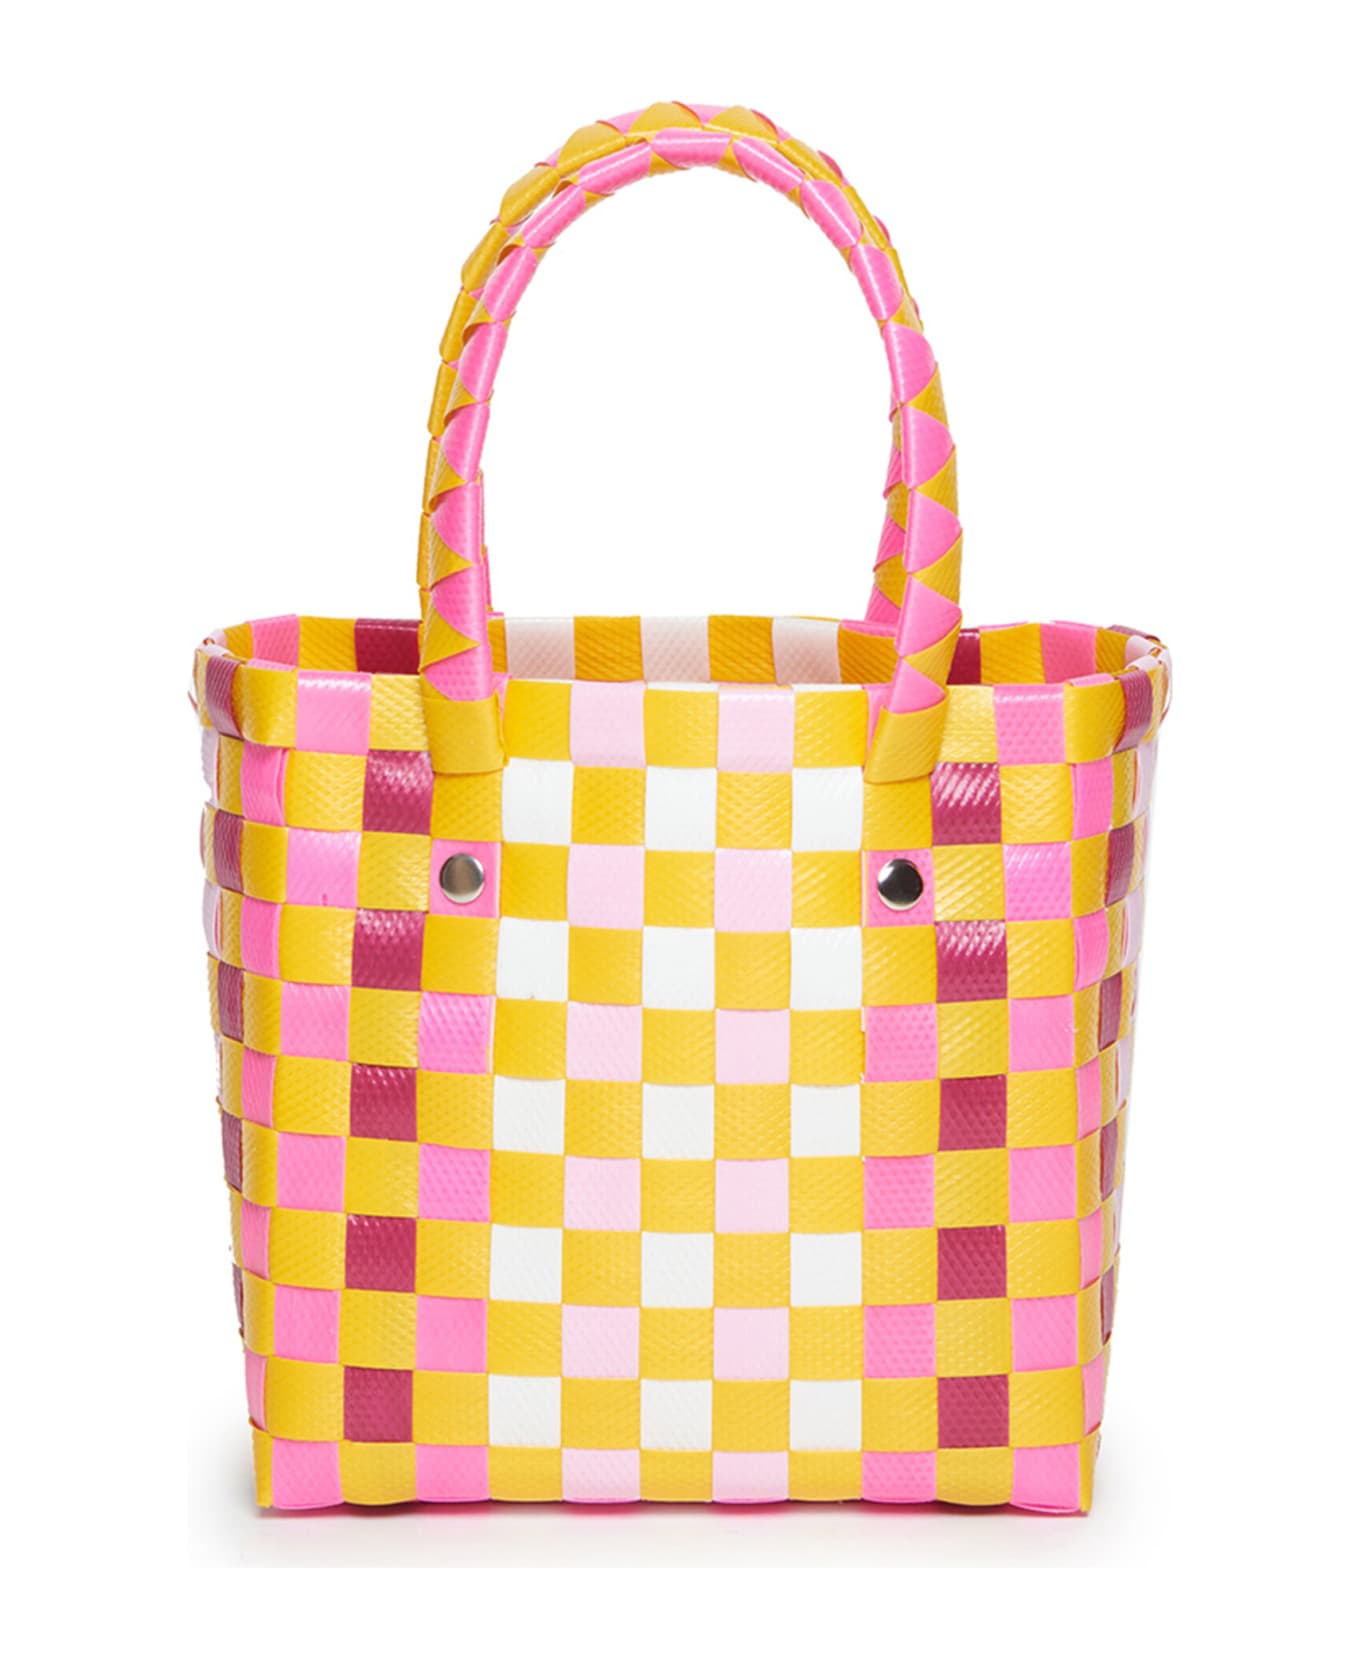 Marni Mw55f Micro Basket Bag Bags Marni Fluo Pink Woven Micro Basket Bag With Handles And Applied Logo - Pink fluo